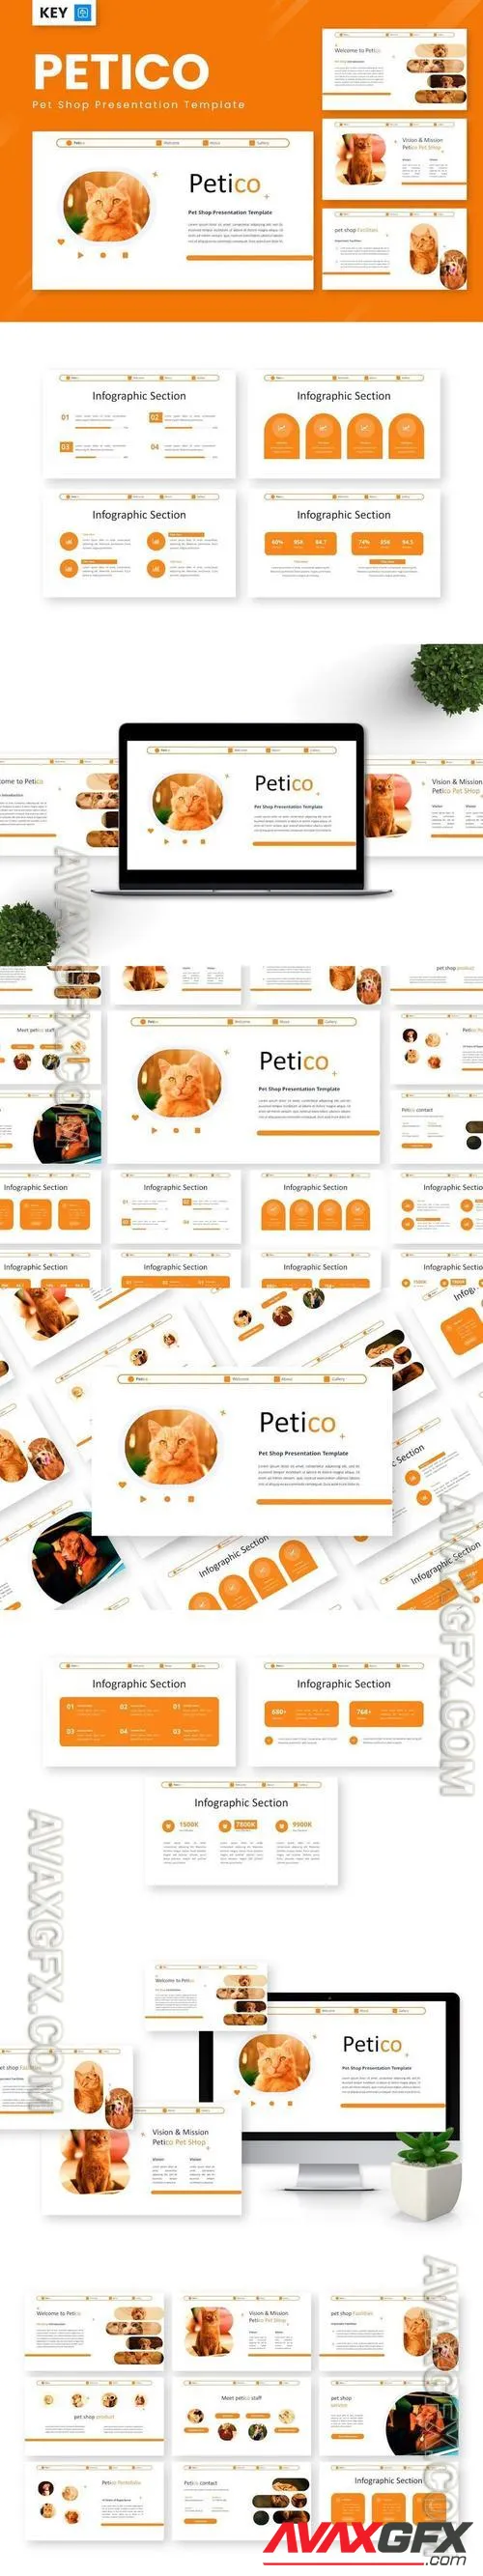 Petico - Pet Shop Keynote Templates